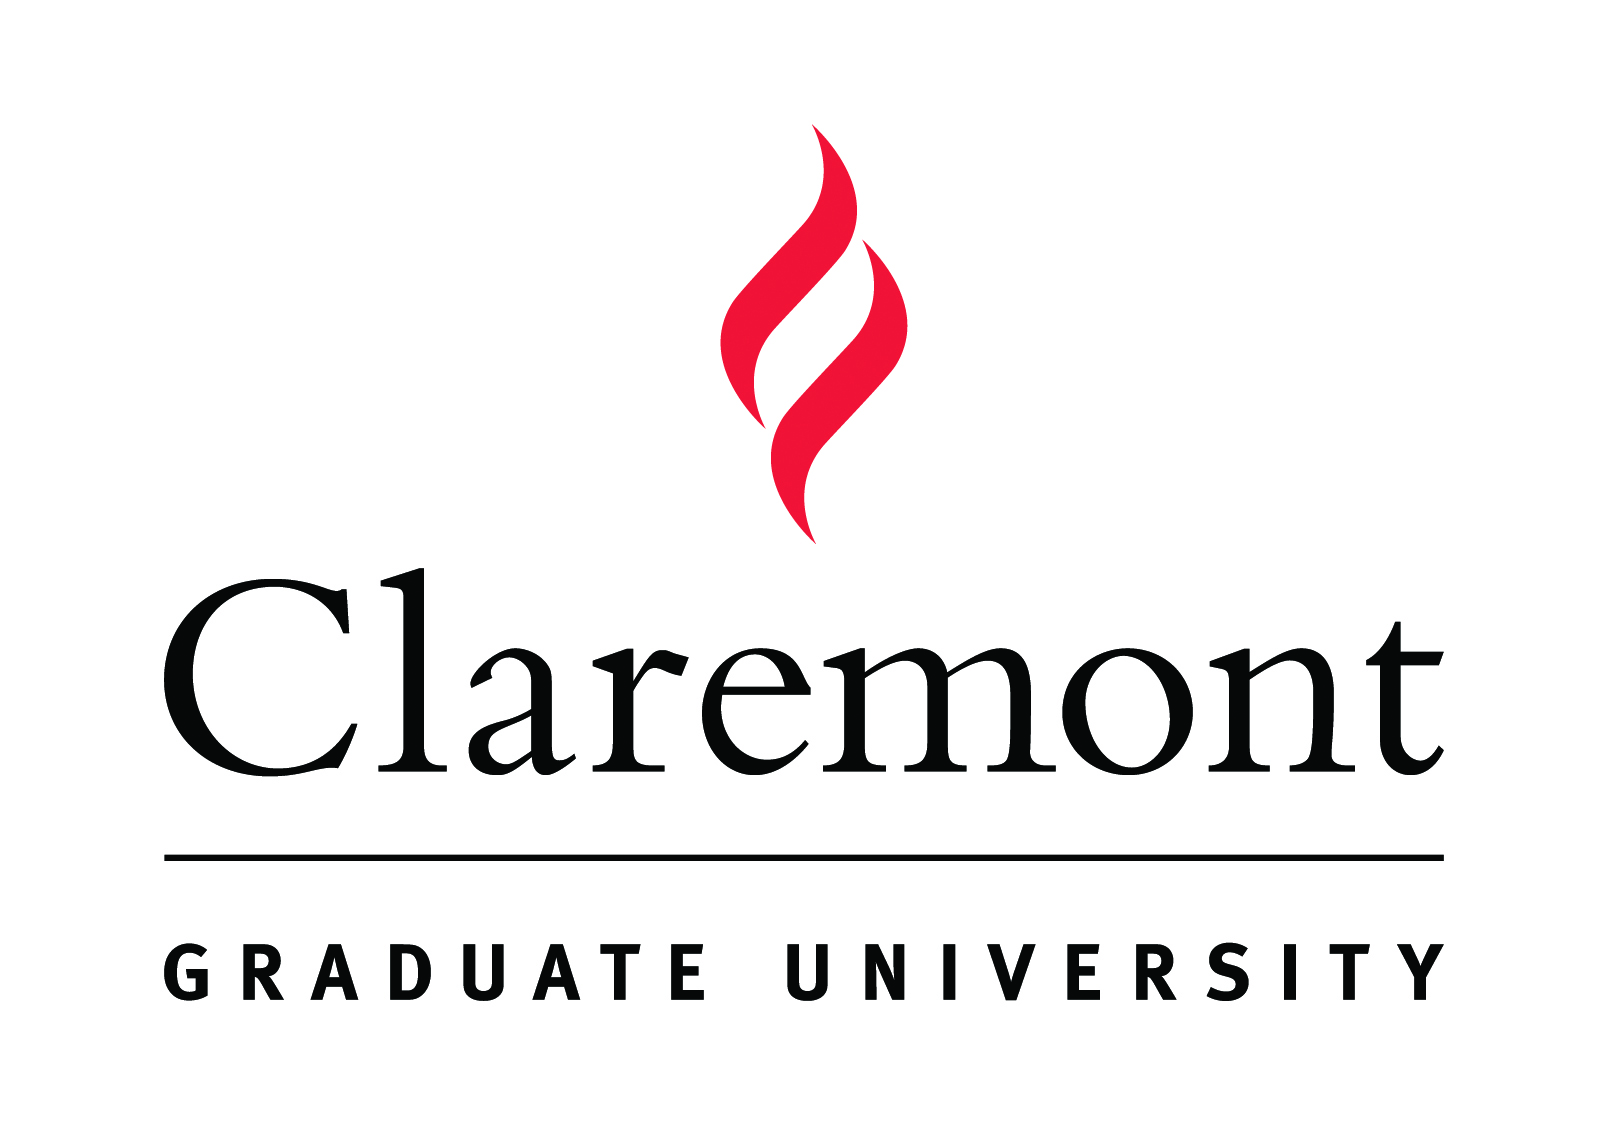 Drucker School of Management - Claremont Graduate University